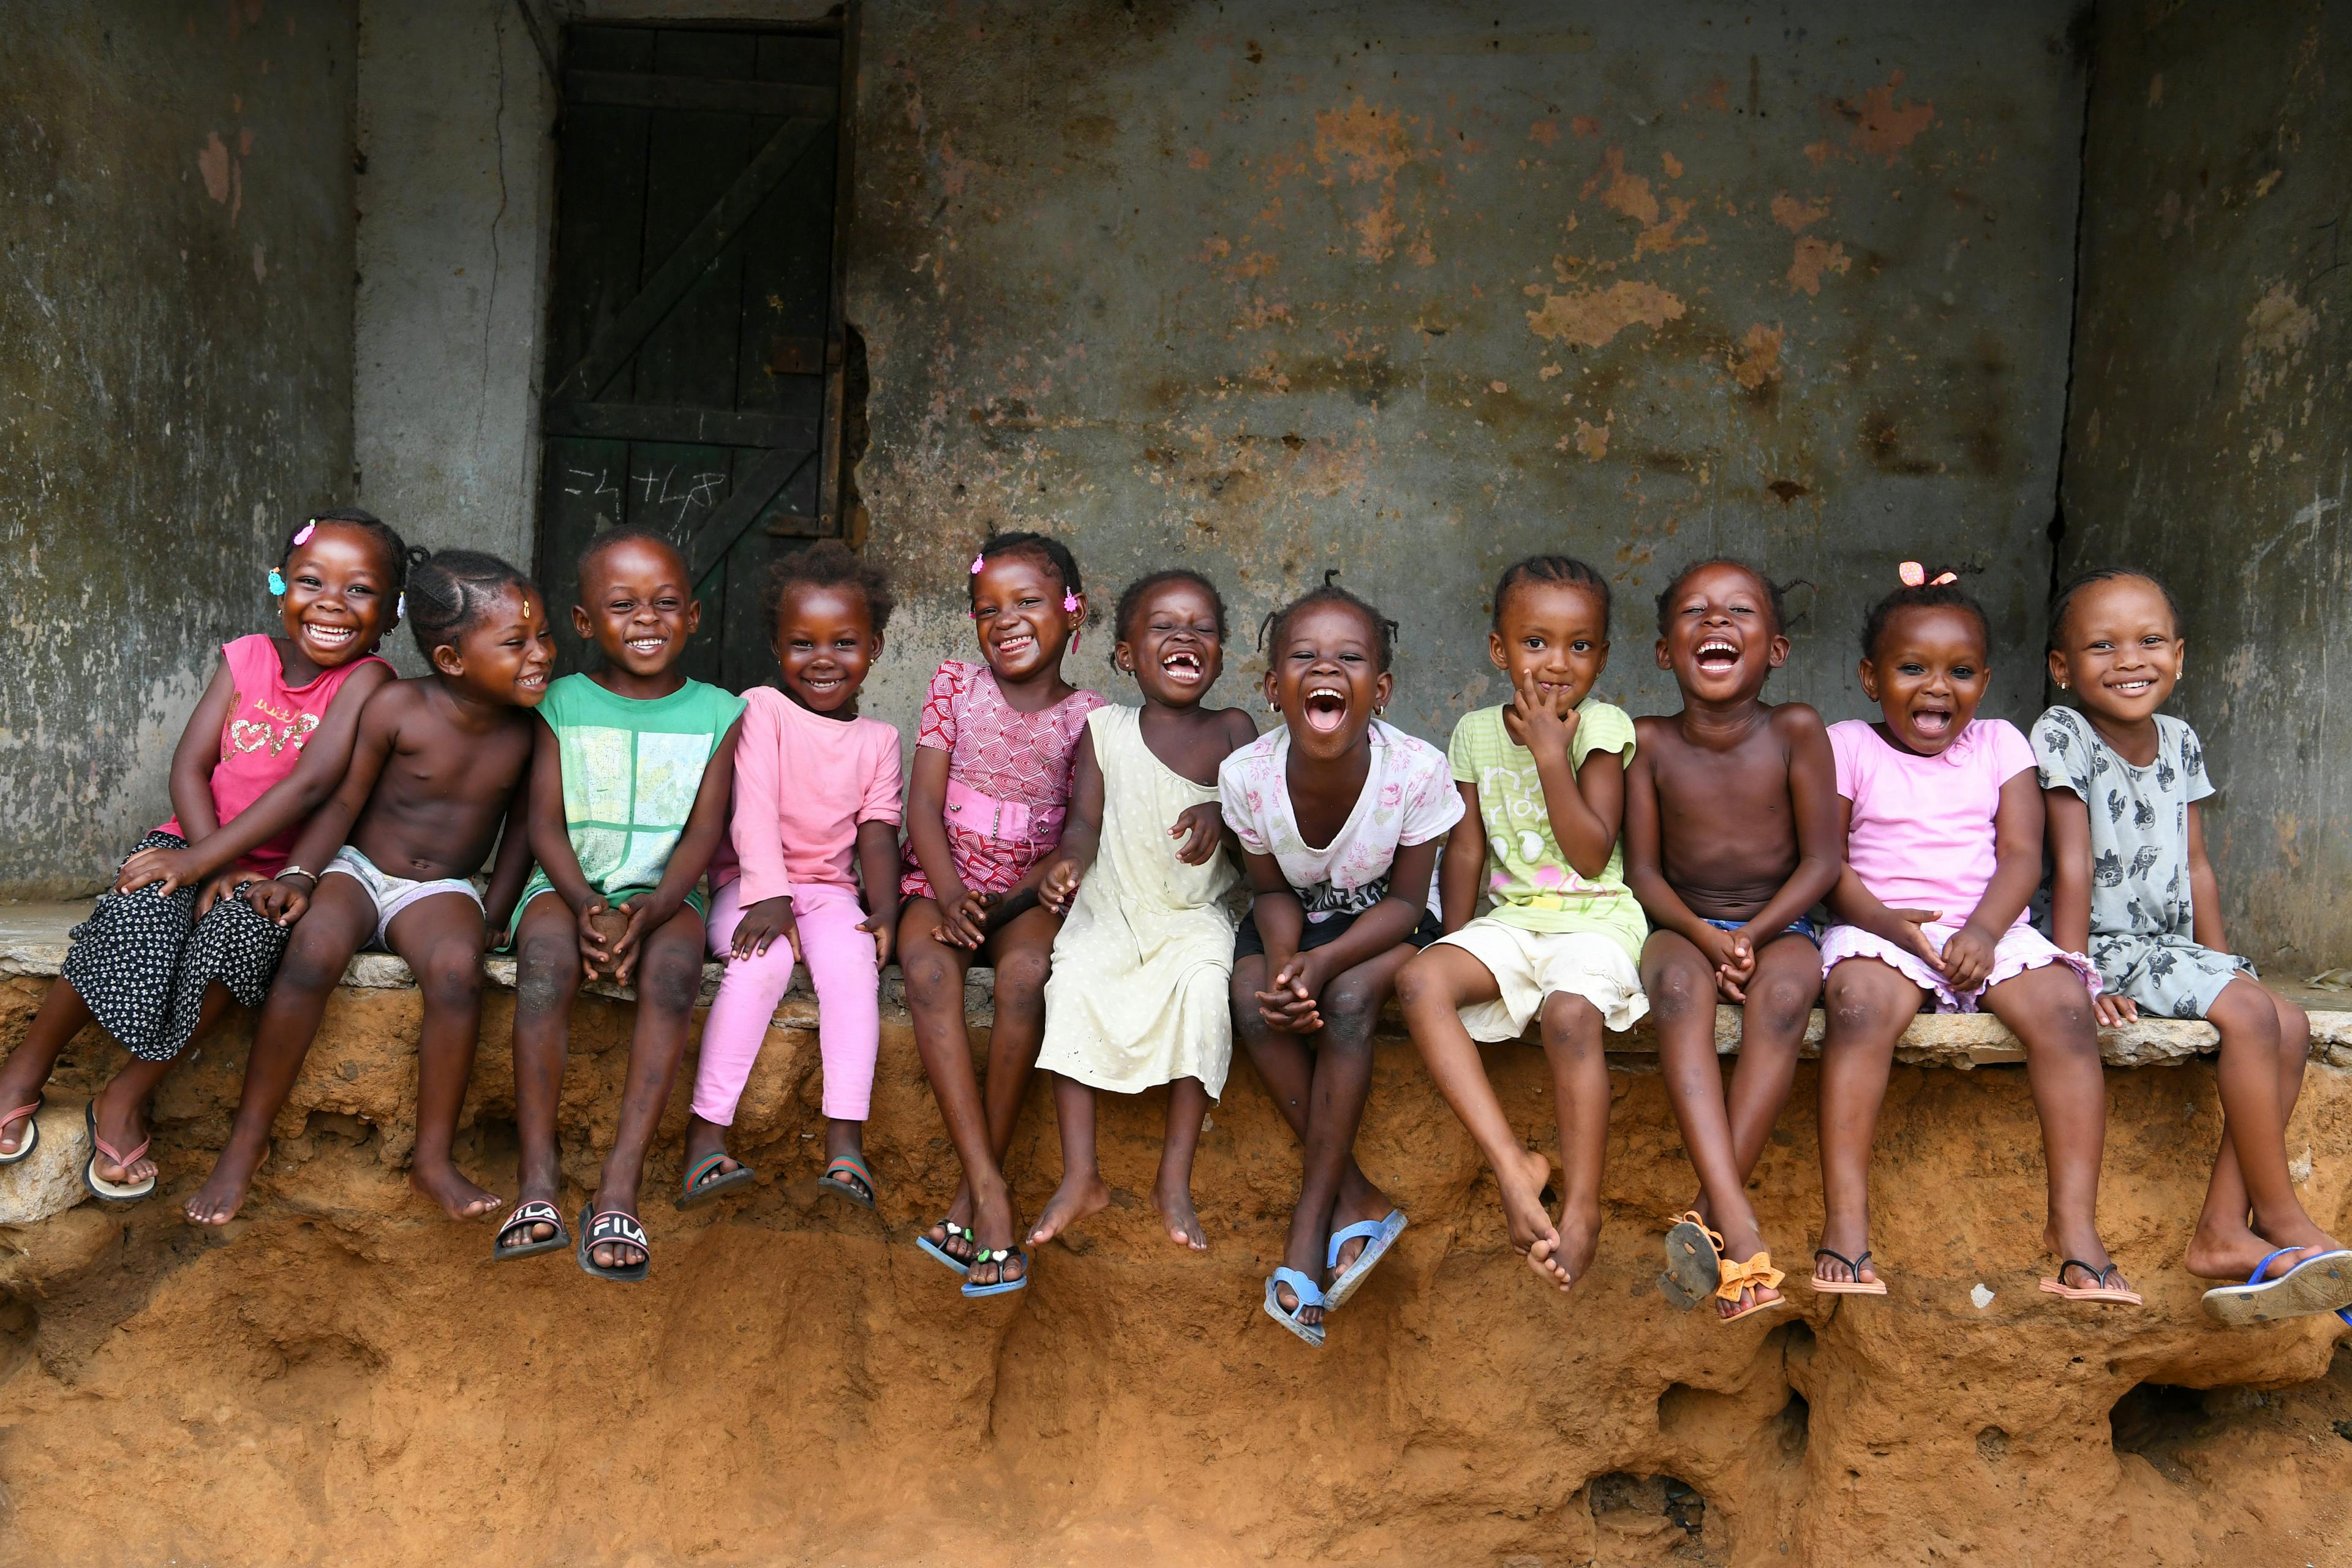 Glada barn i Elfenbenskusten  - original